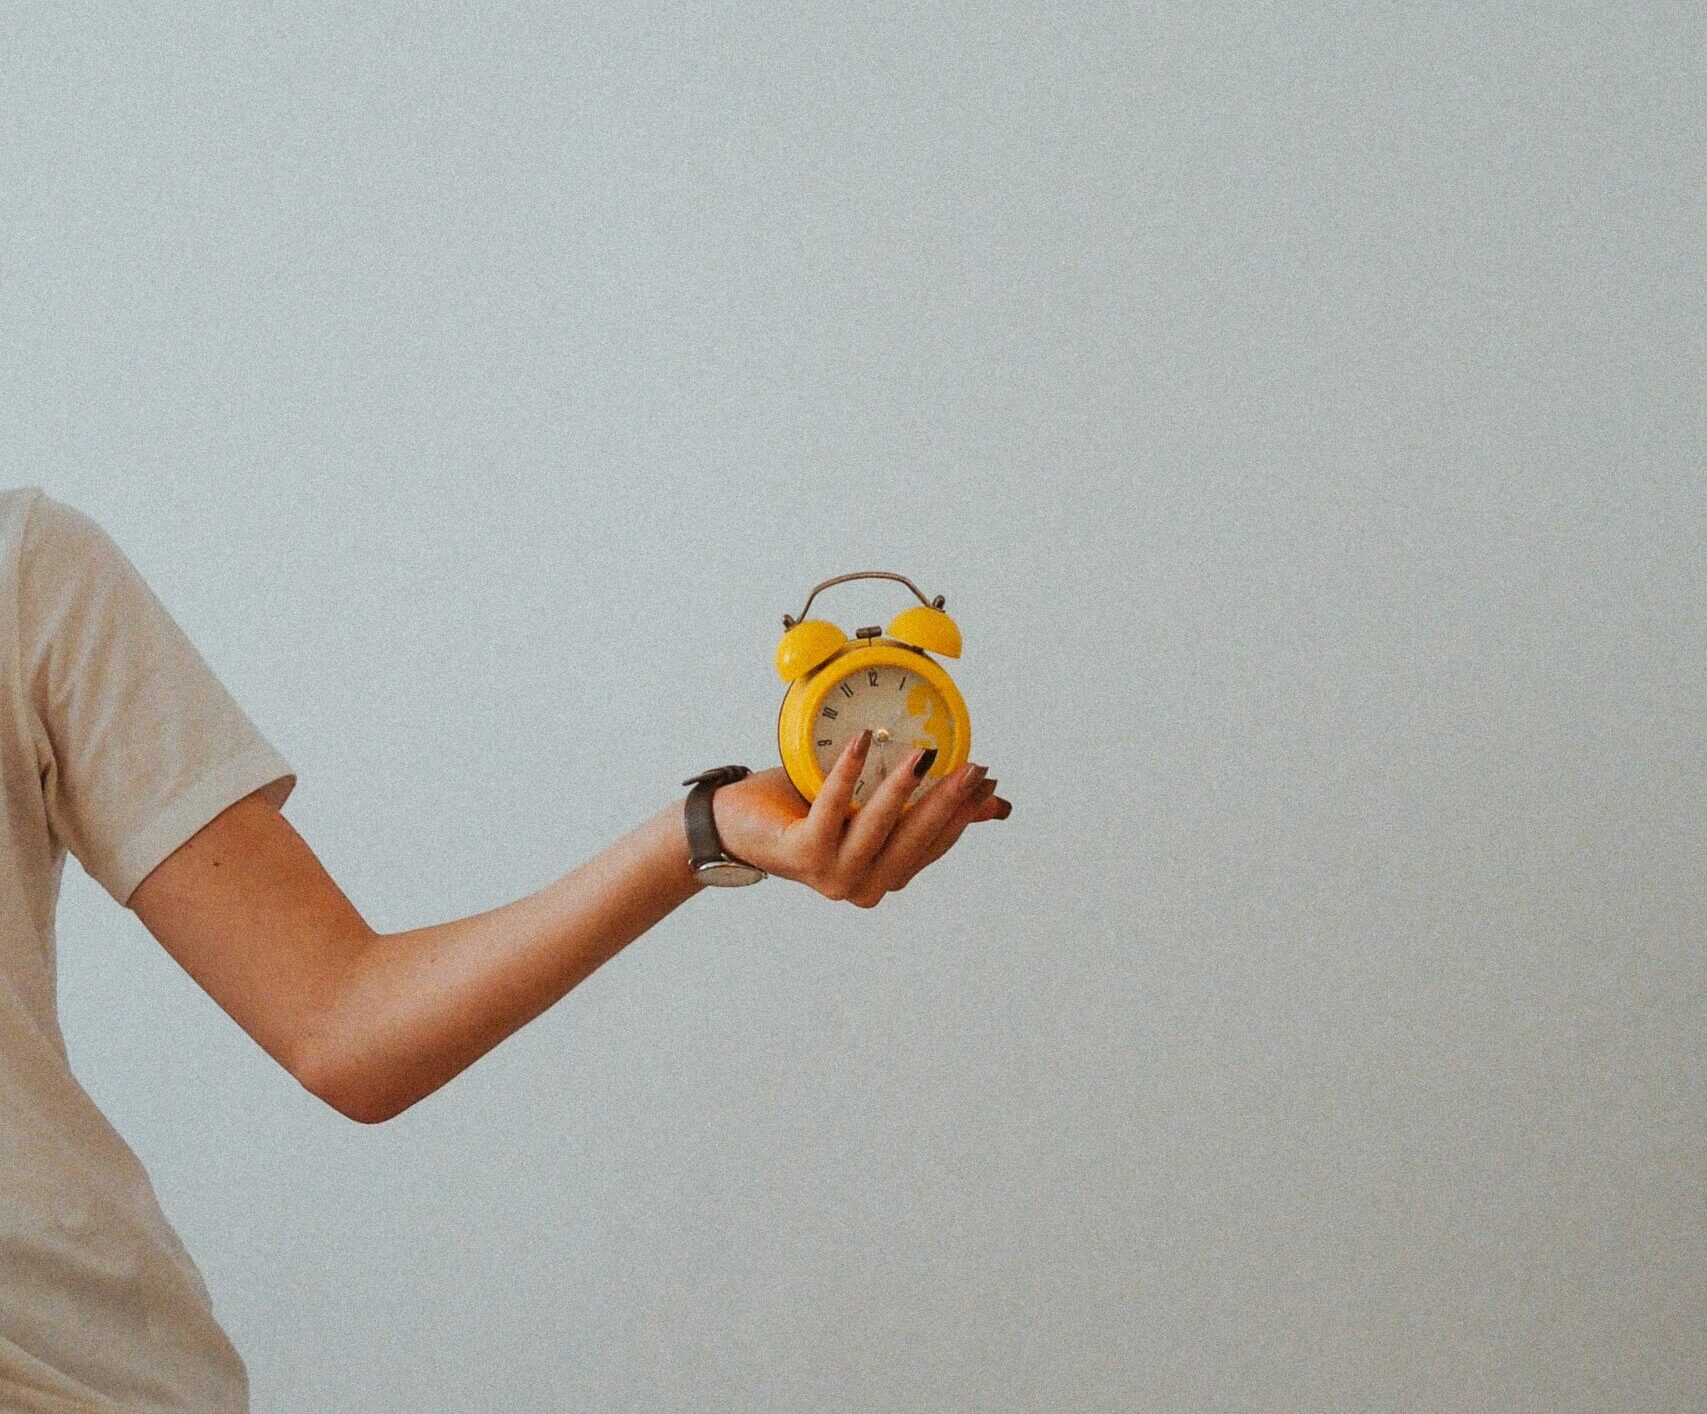 Woman holding yellow analog alarm clock in hand